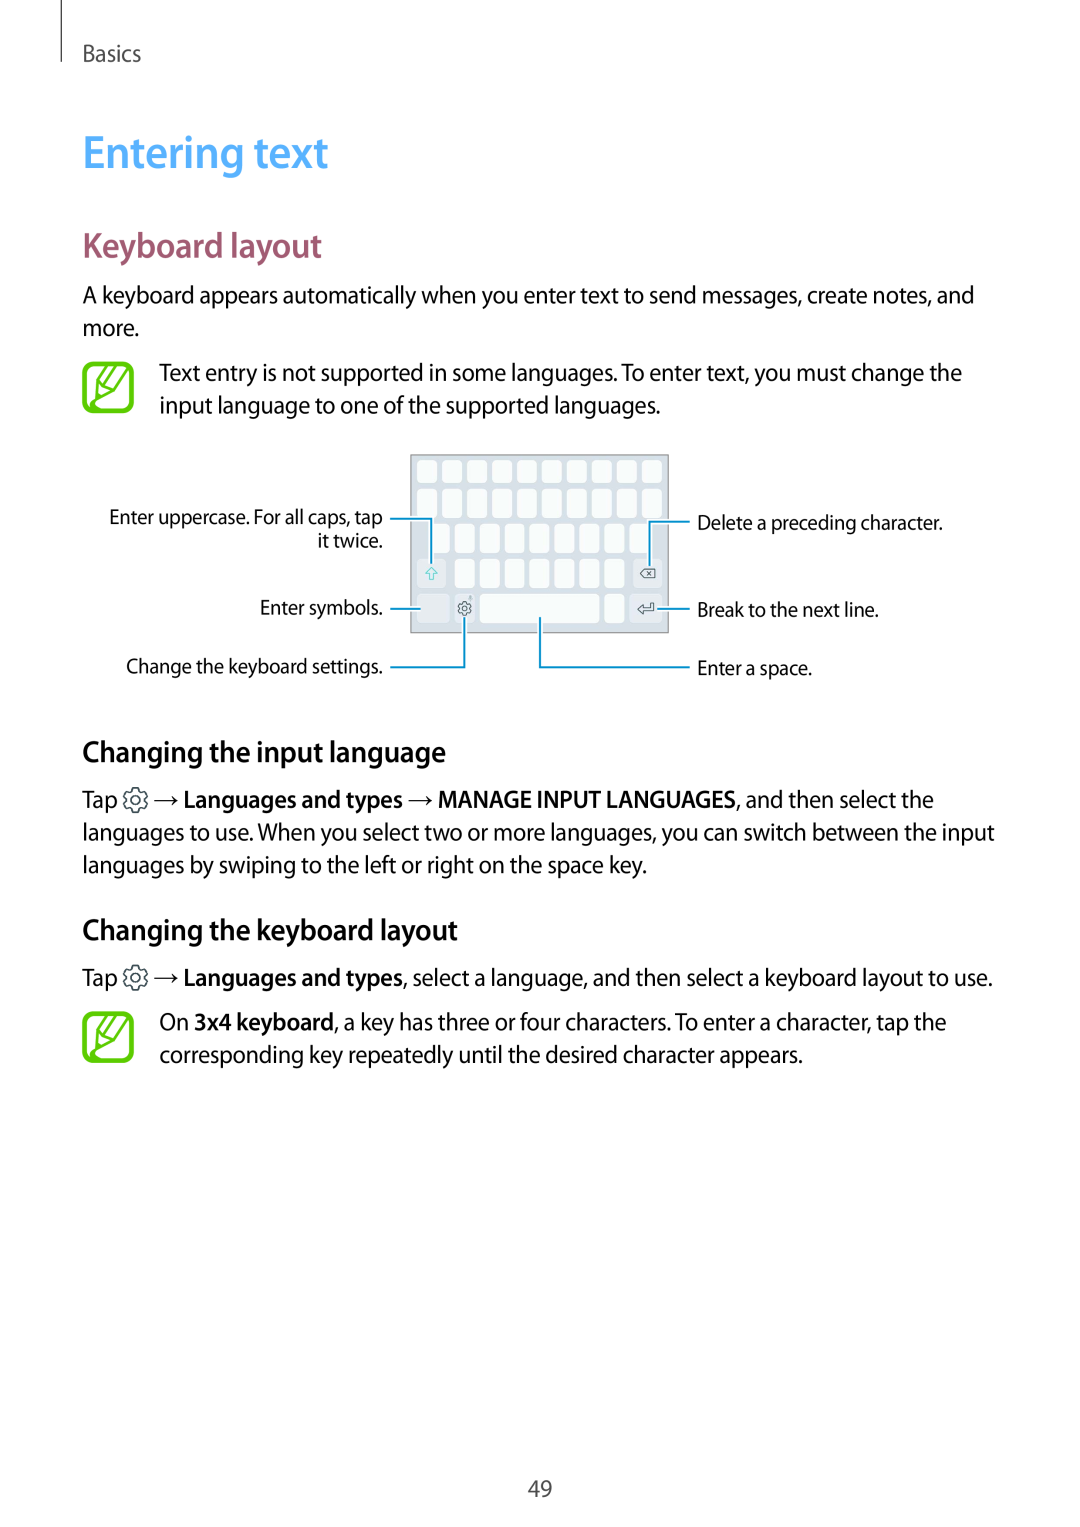 Samsung SM-A730FZDEILO Entering text, Keyboard layout, Changing the input language, Changing the keyboard layout, Basics 